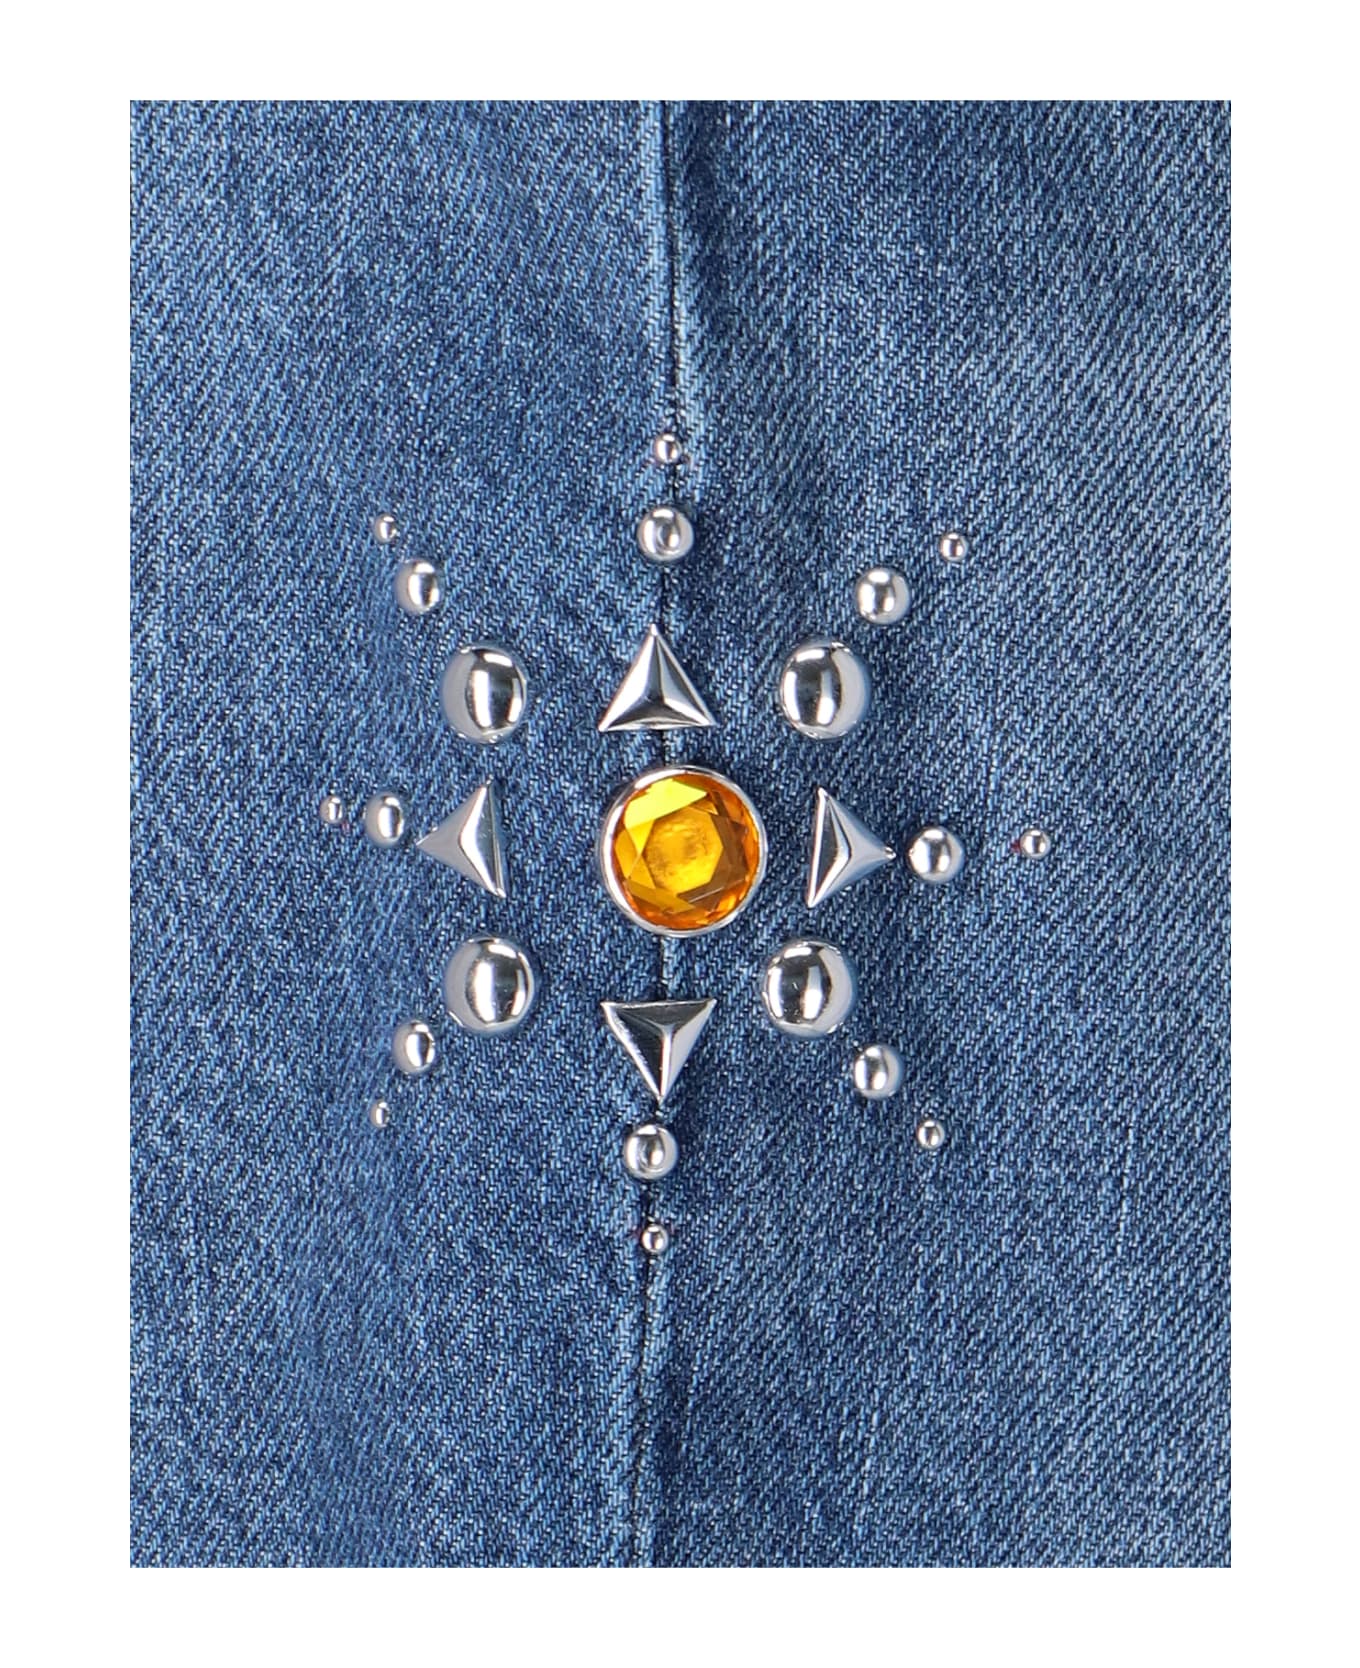 Washington Dee-Cee Studded Detail Jeans - Blue デニム